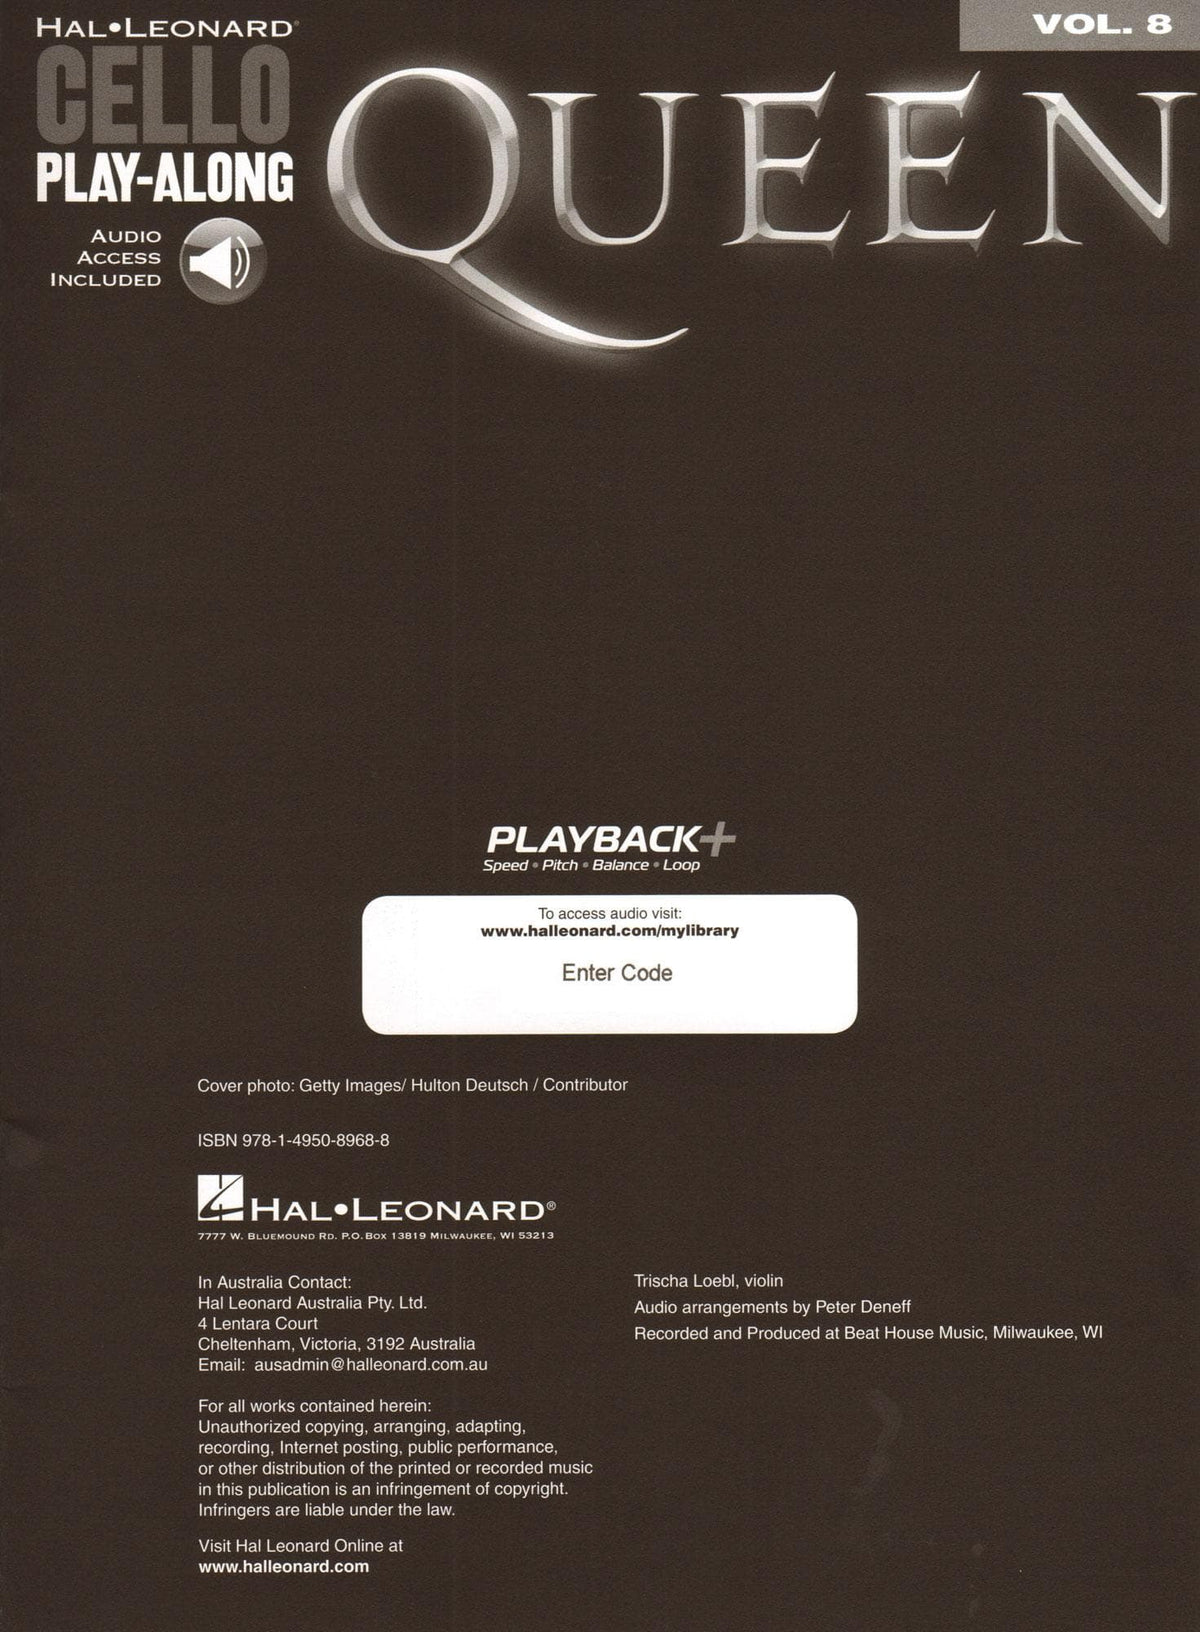 Queen - 8 Favorites - Cello Play-Along Vol. 8 - for Cello with Audio Accompaniment - Hal Leonard